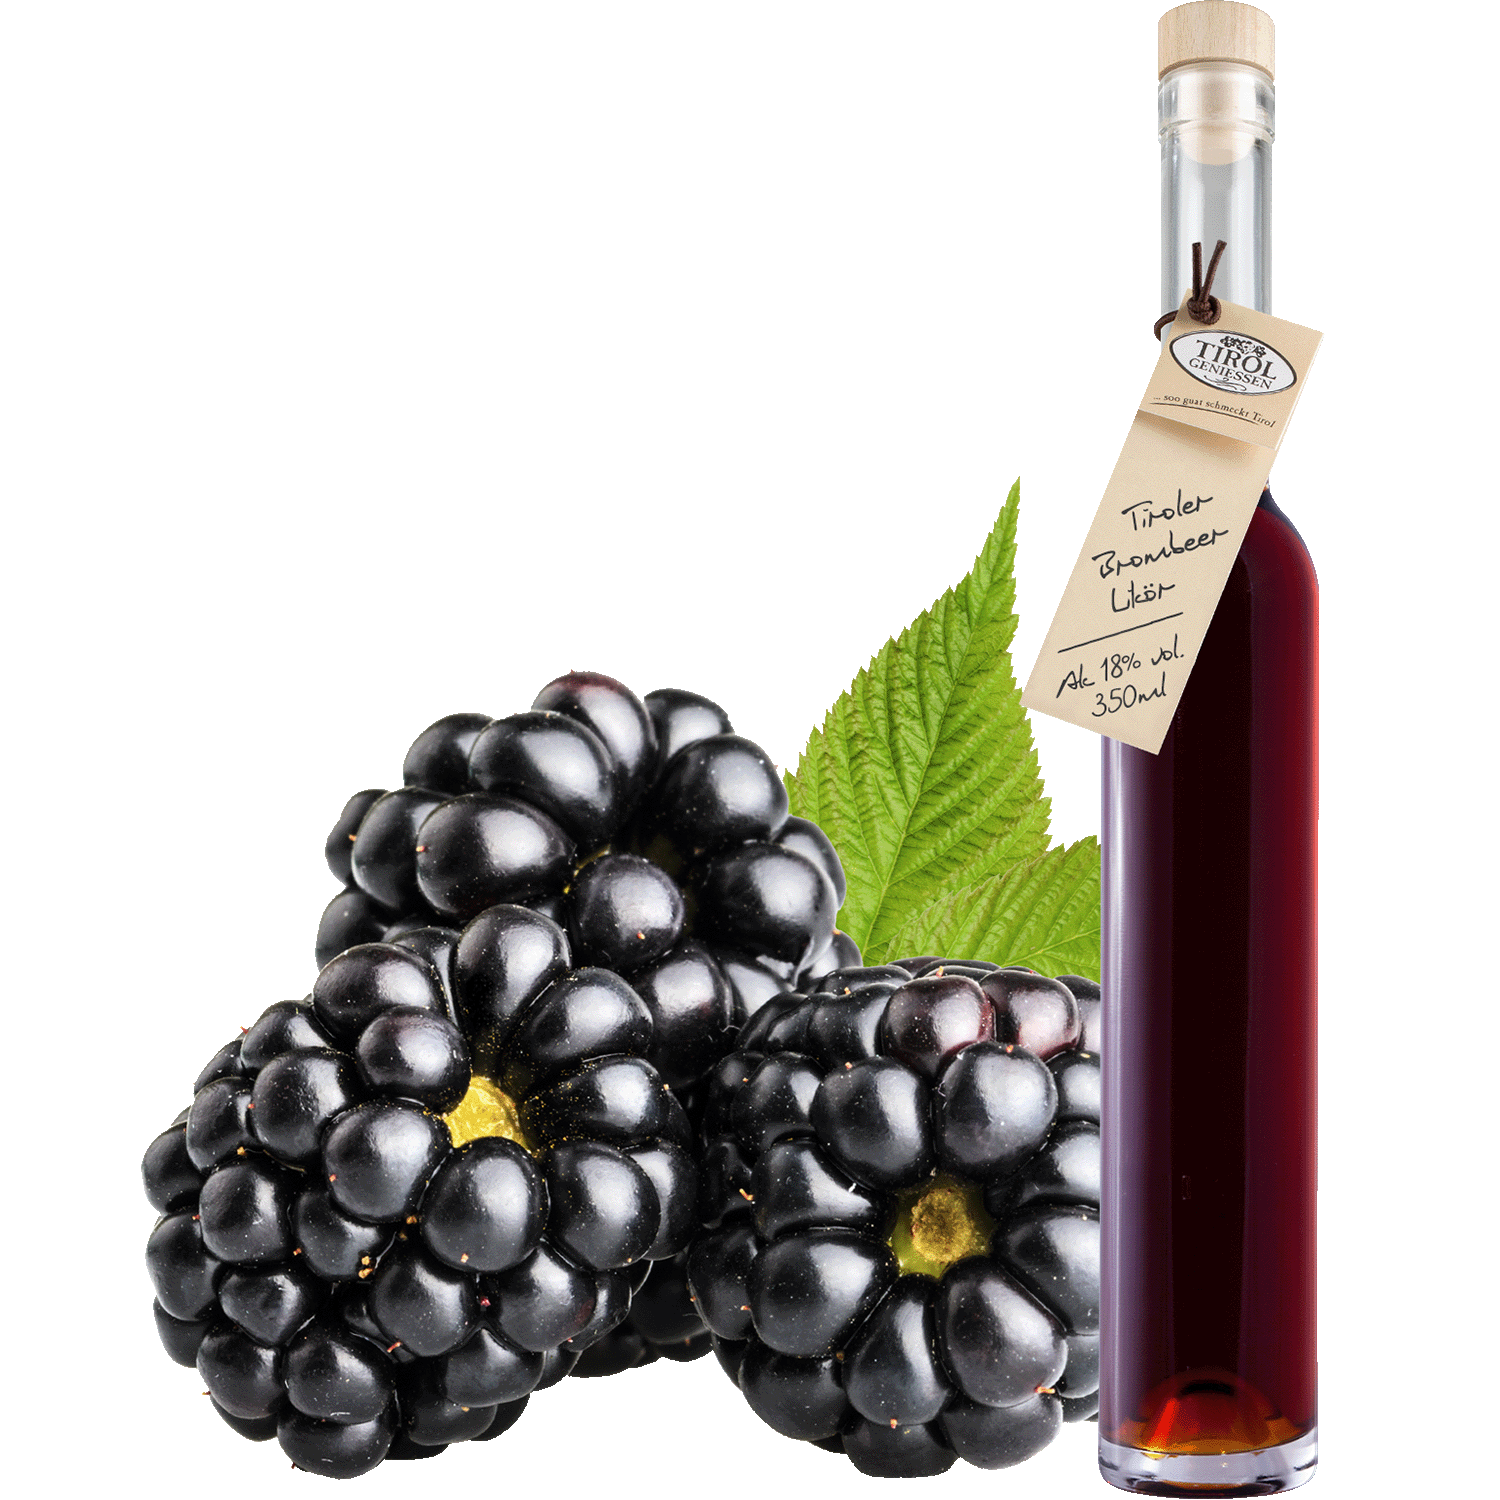 Blackberry Liqueur in gift bottle from Austria from Tirol Geniessen